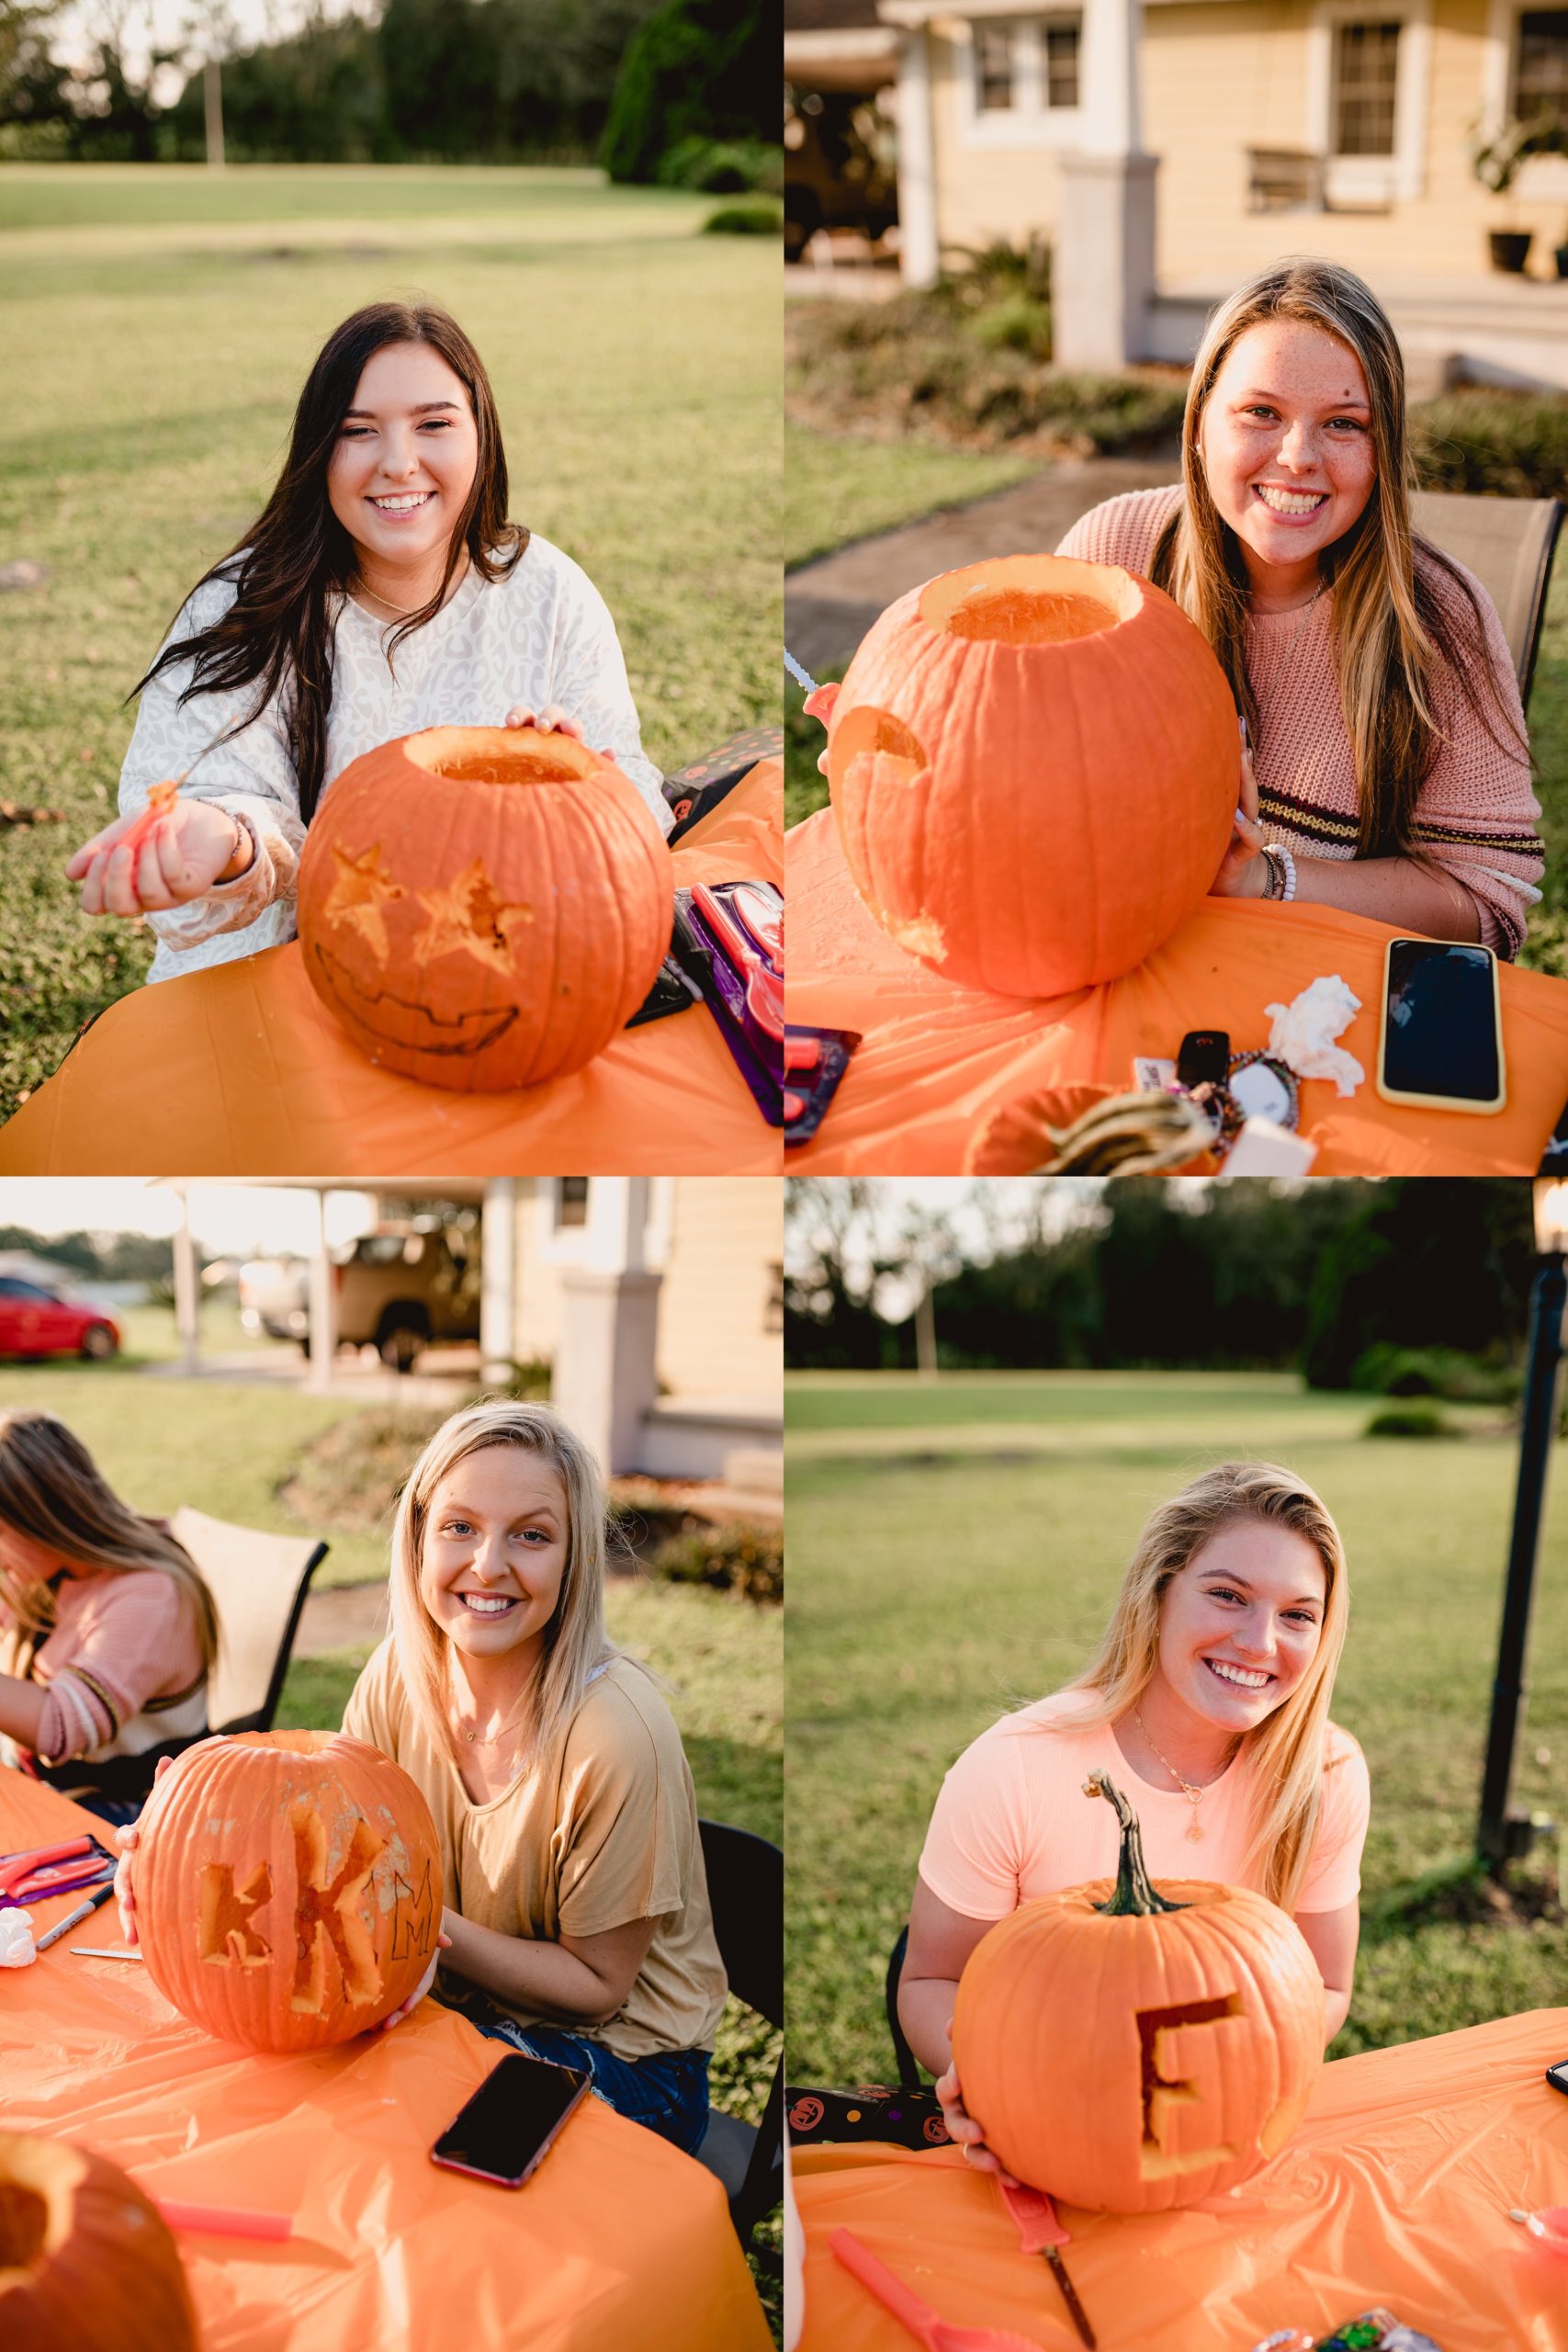 Pumpkin carving group ideas for seniors